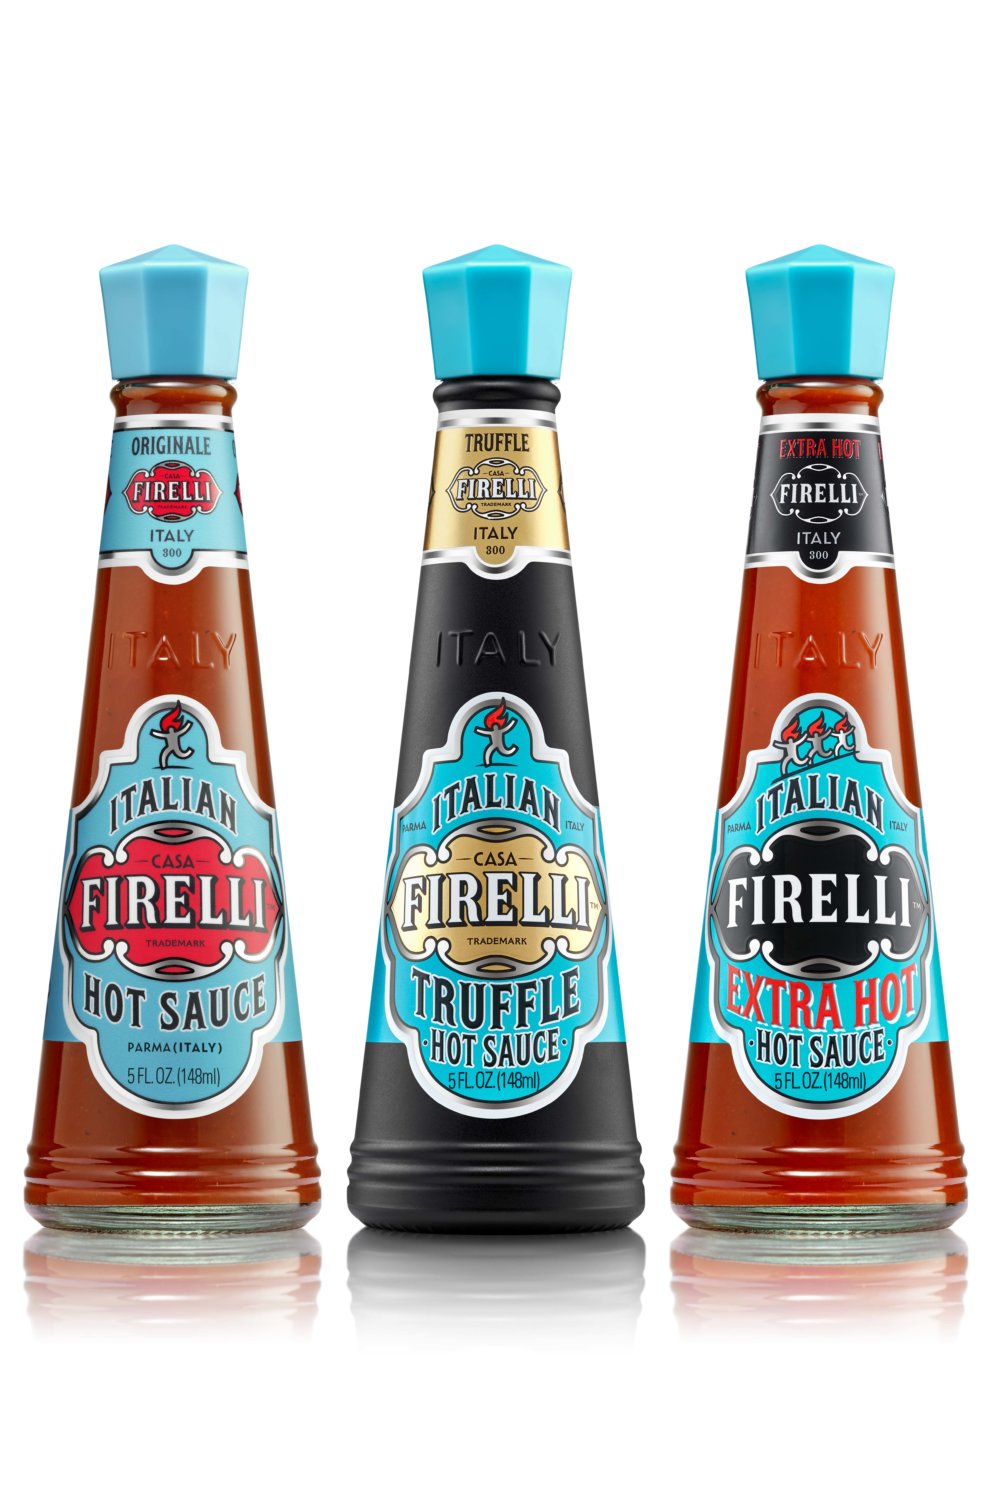 Firelli range hot sauce